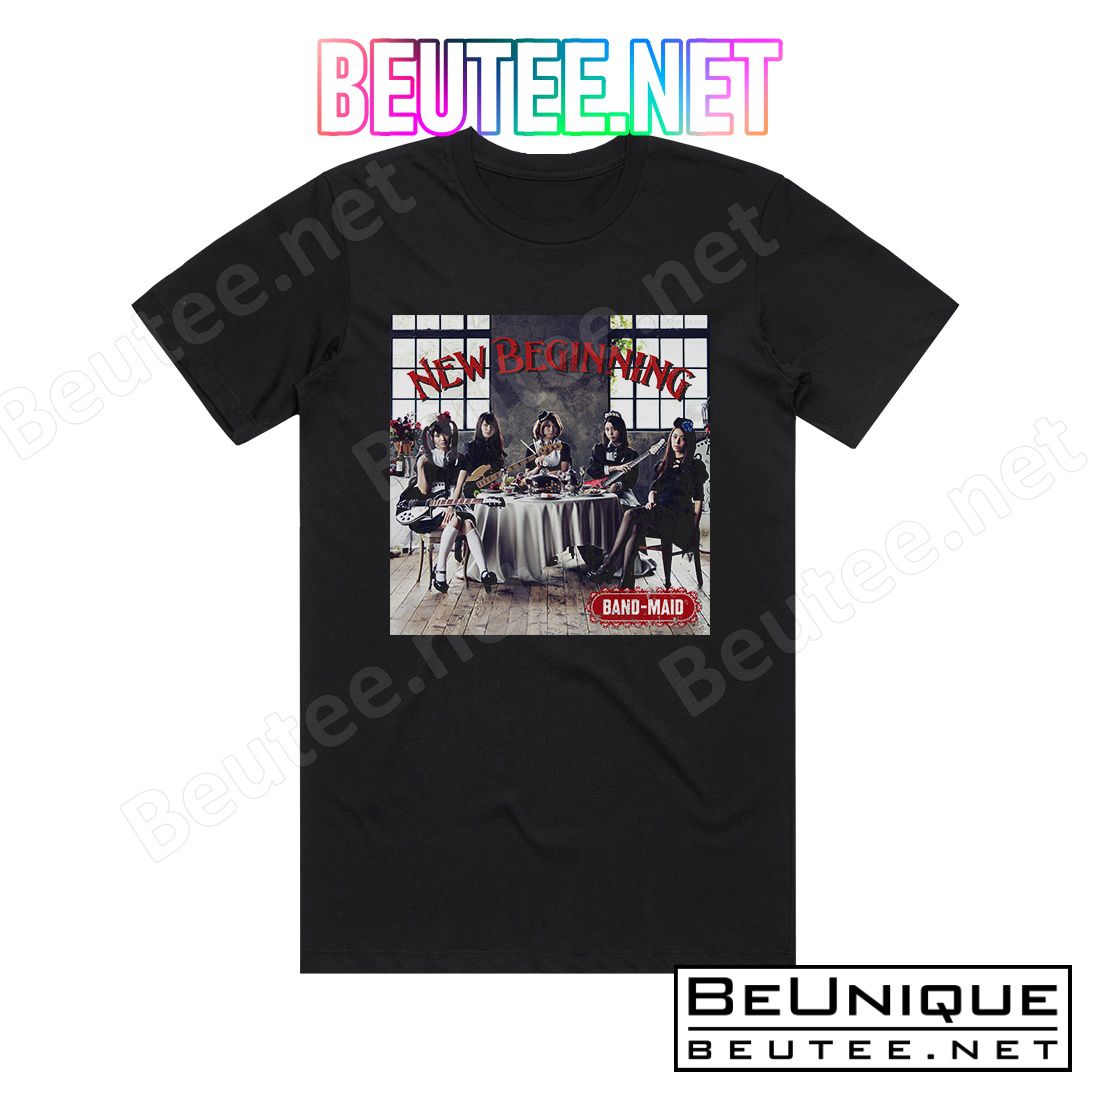 BAND-MAID New Beginning Album Cover T-Shirt